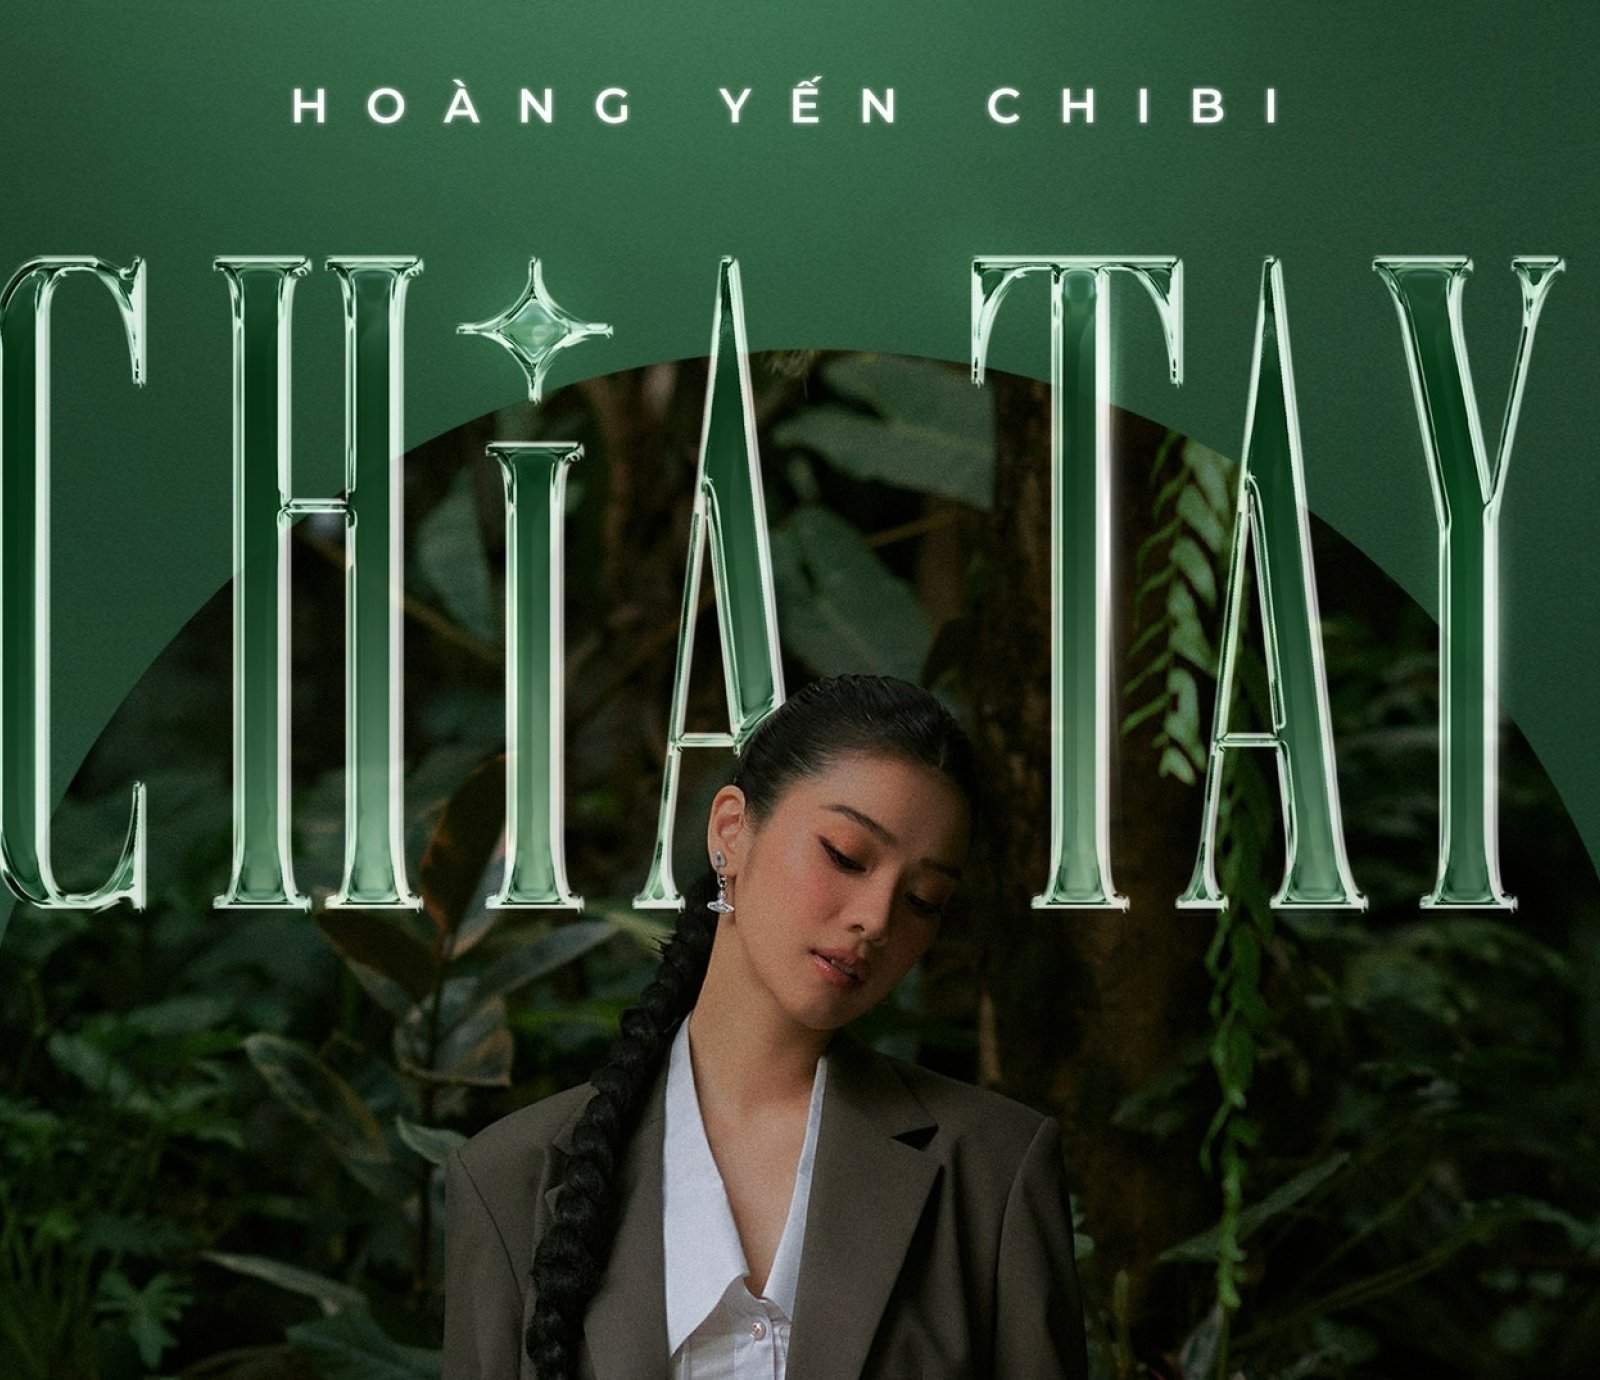 Hoang Yen Chibi